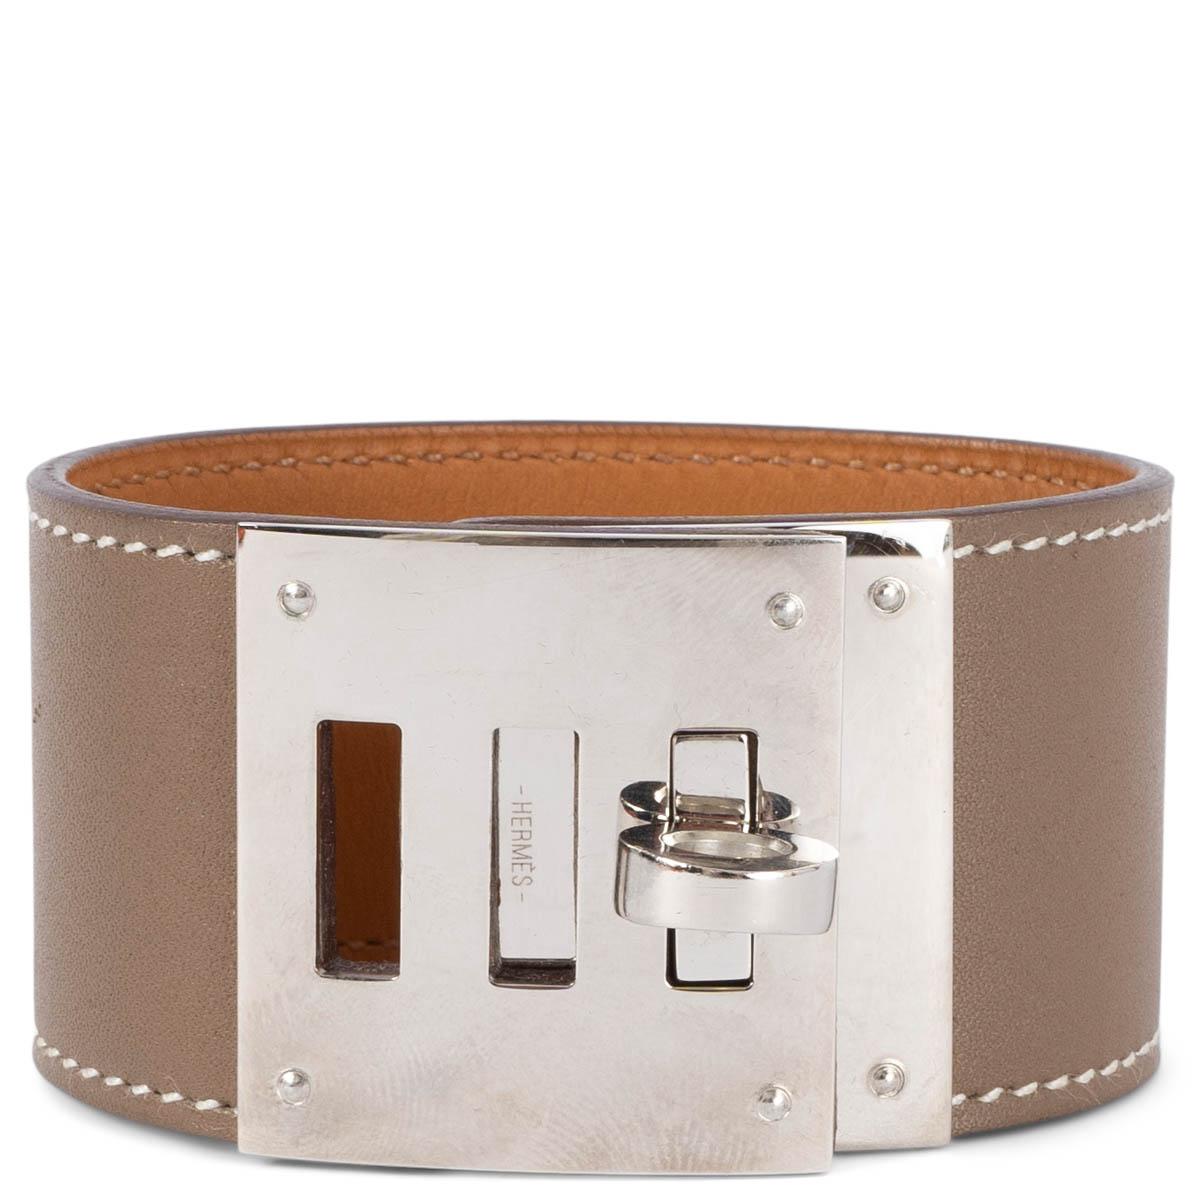 HERMES Etoupe grey Swift leather KELLY DOG EXTREME Cuff Bracelet S For Sale